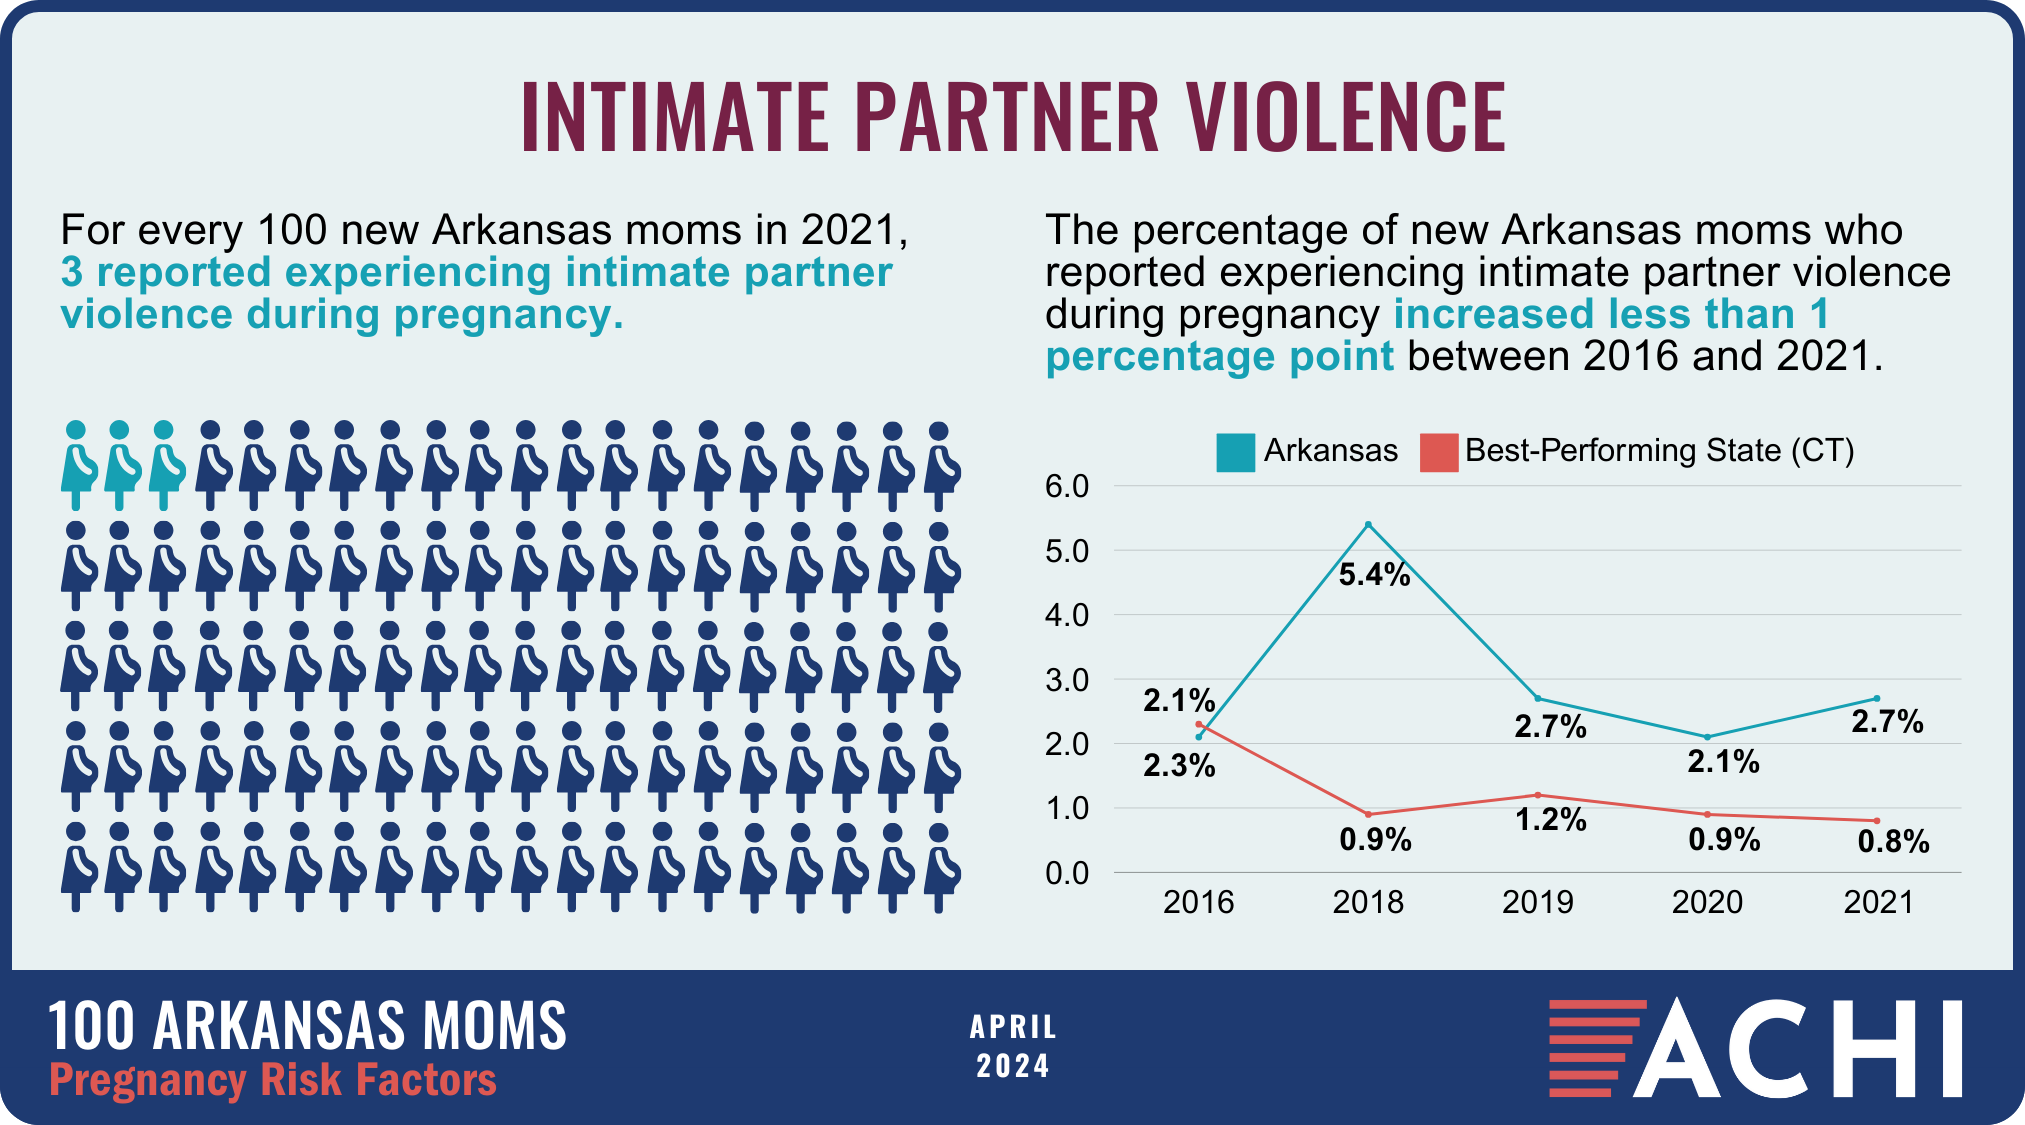 16_240416B_100 Arkansas Moms_Pregnancy Risk Factors_Intimate Partner Violence